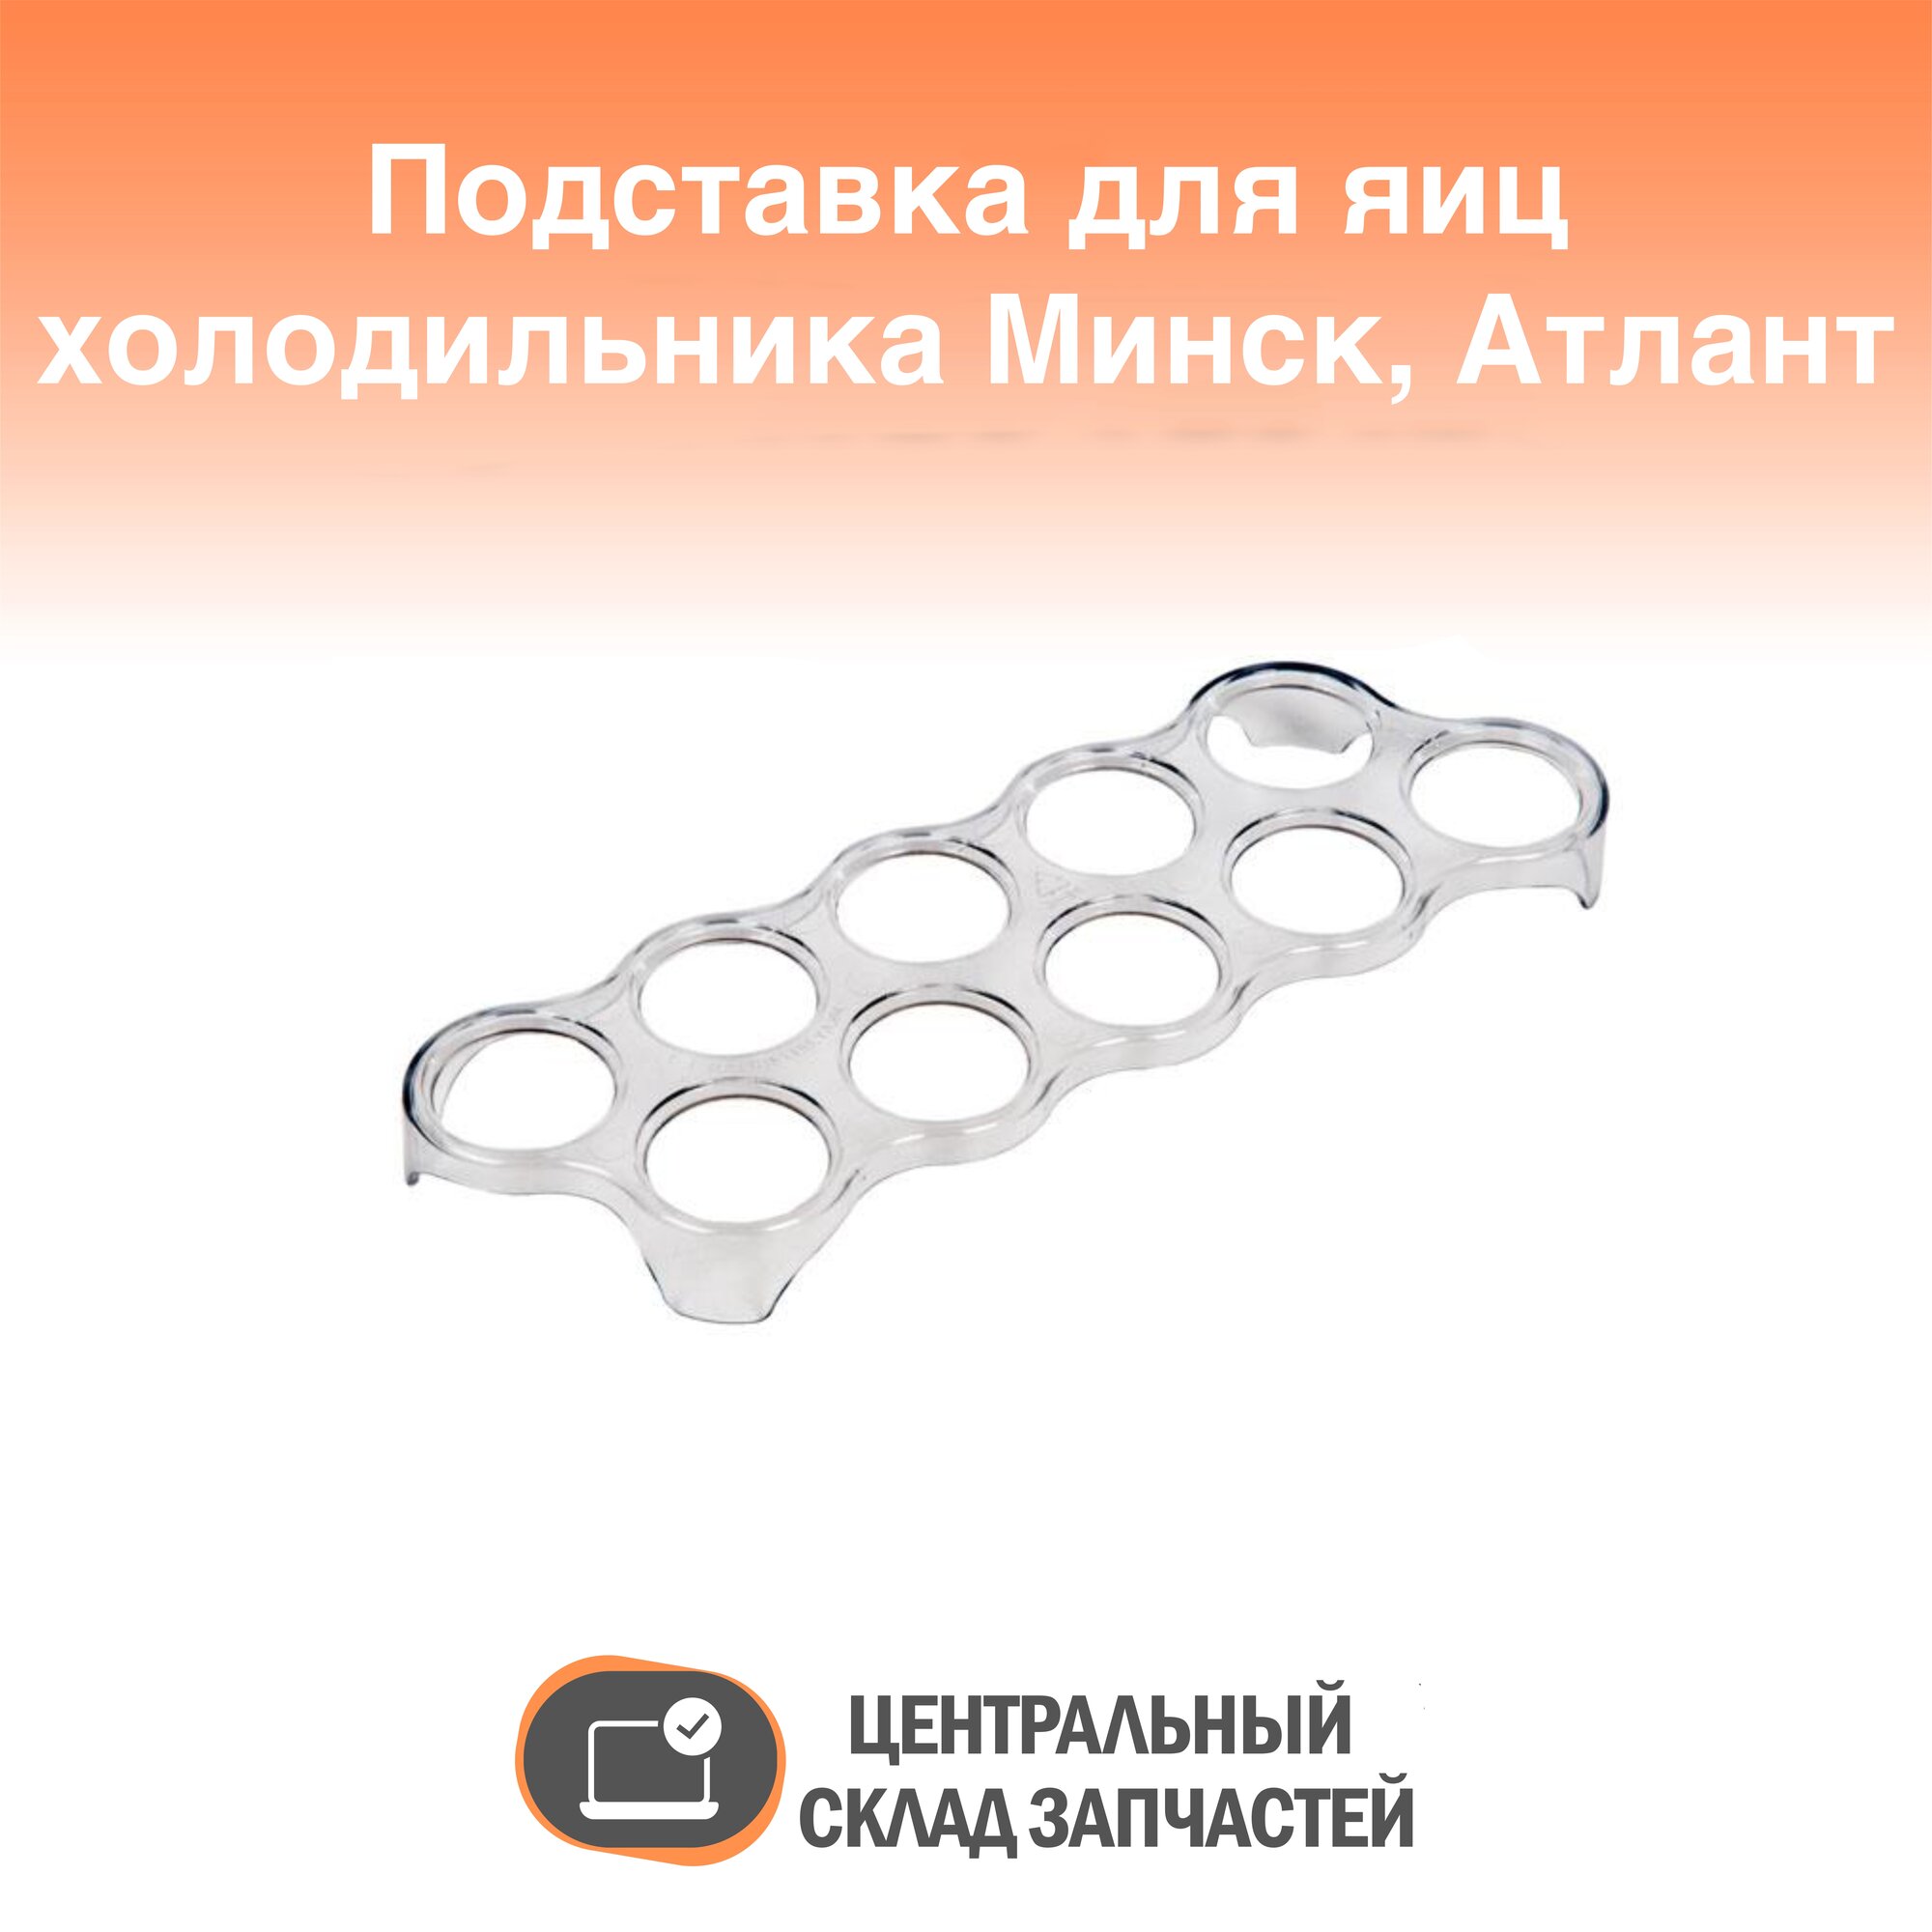 769748100101 Подставка для яиц холодильника Атлант, Минск